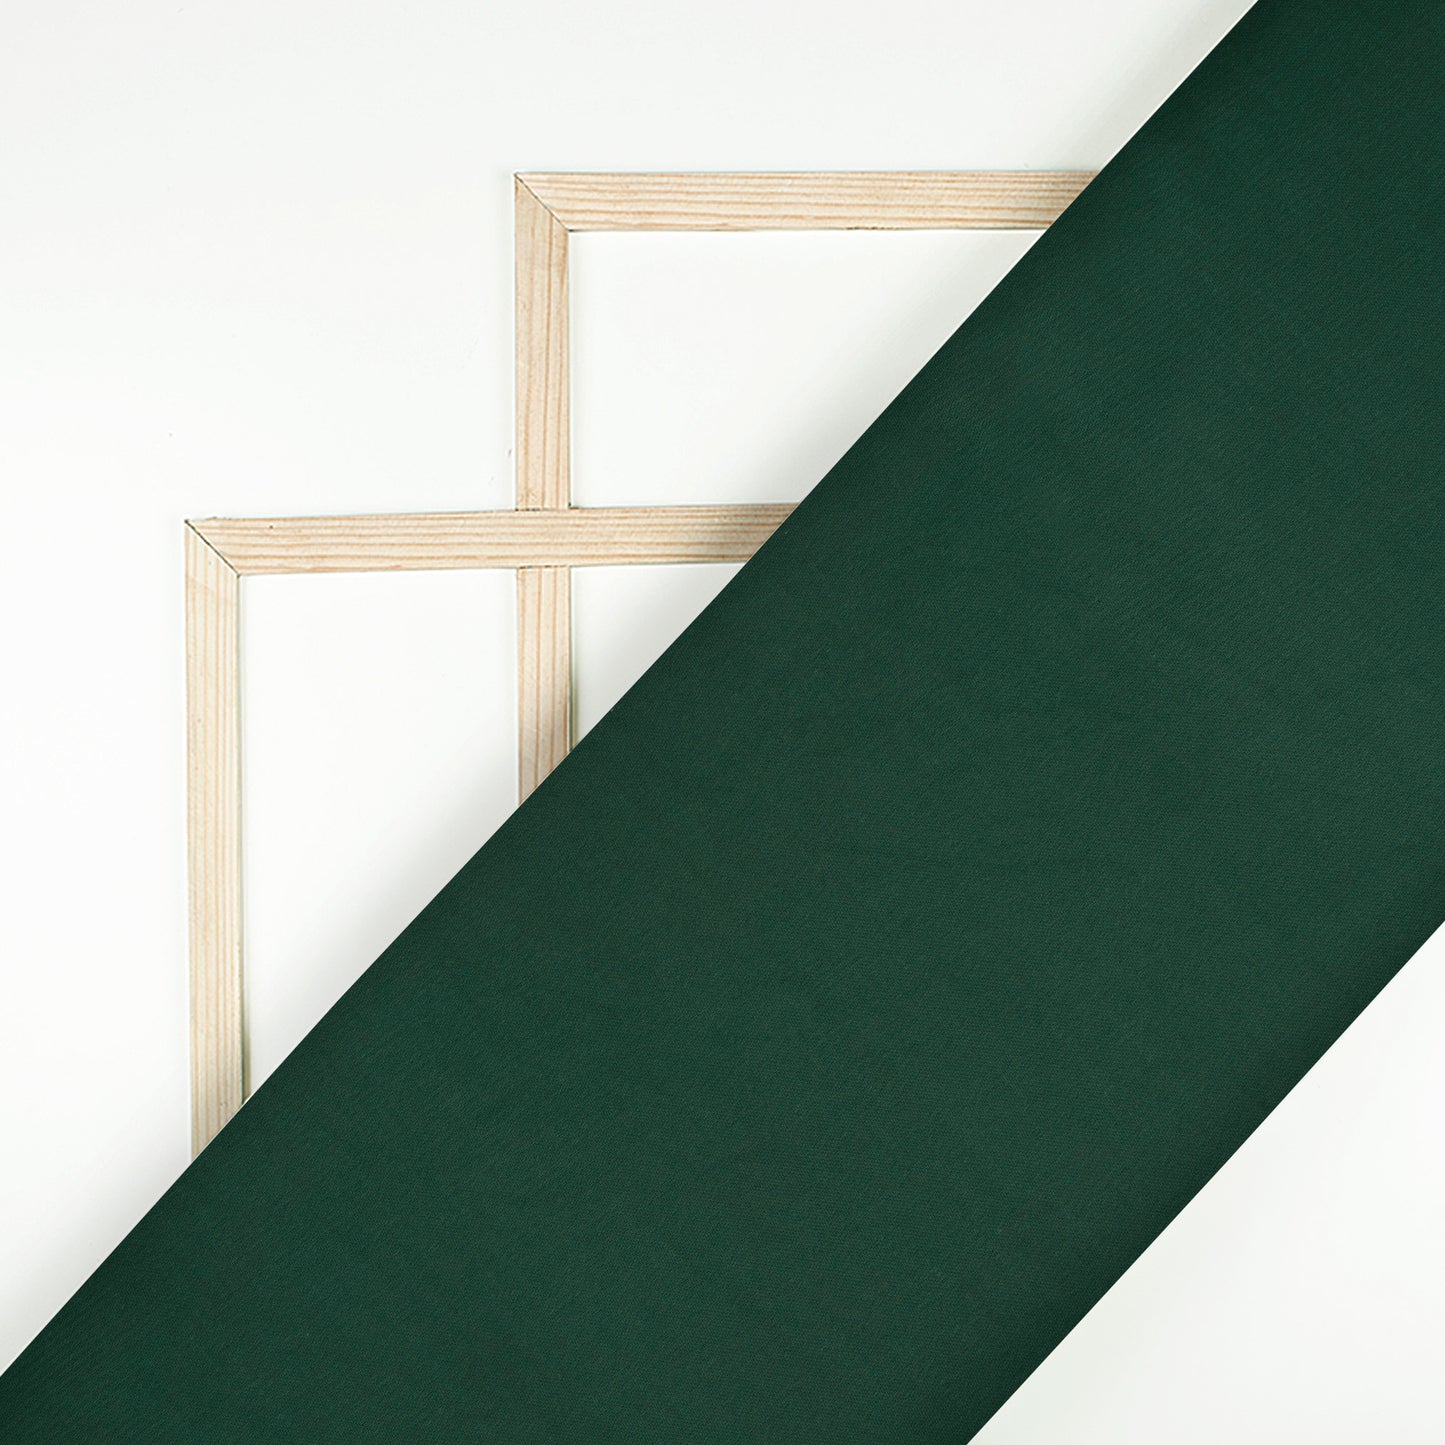 Castleton Green Plain Lazer Satin Fabric